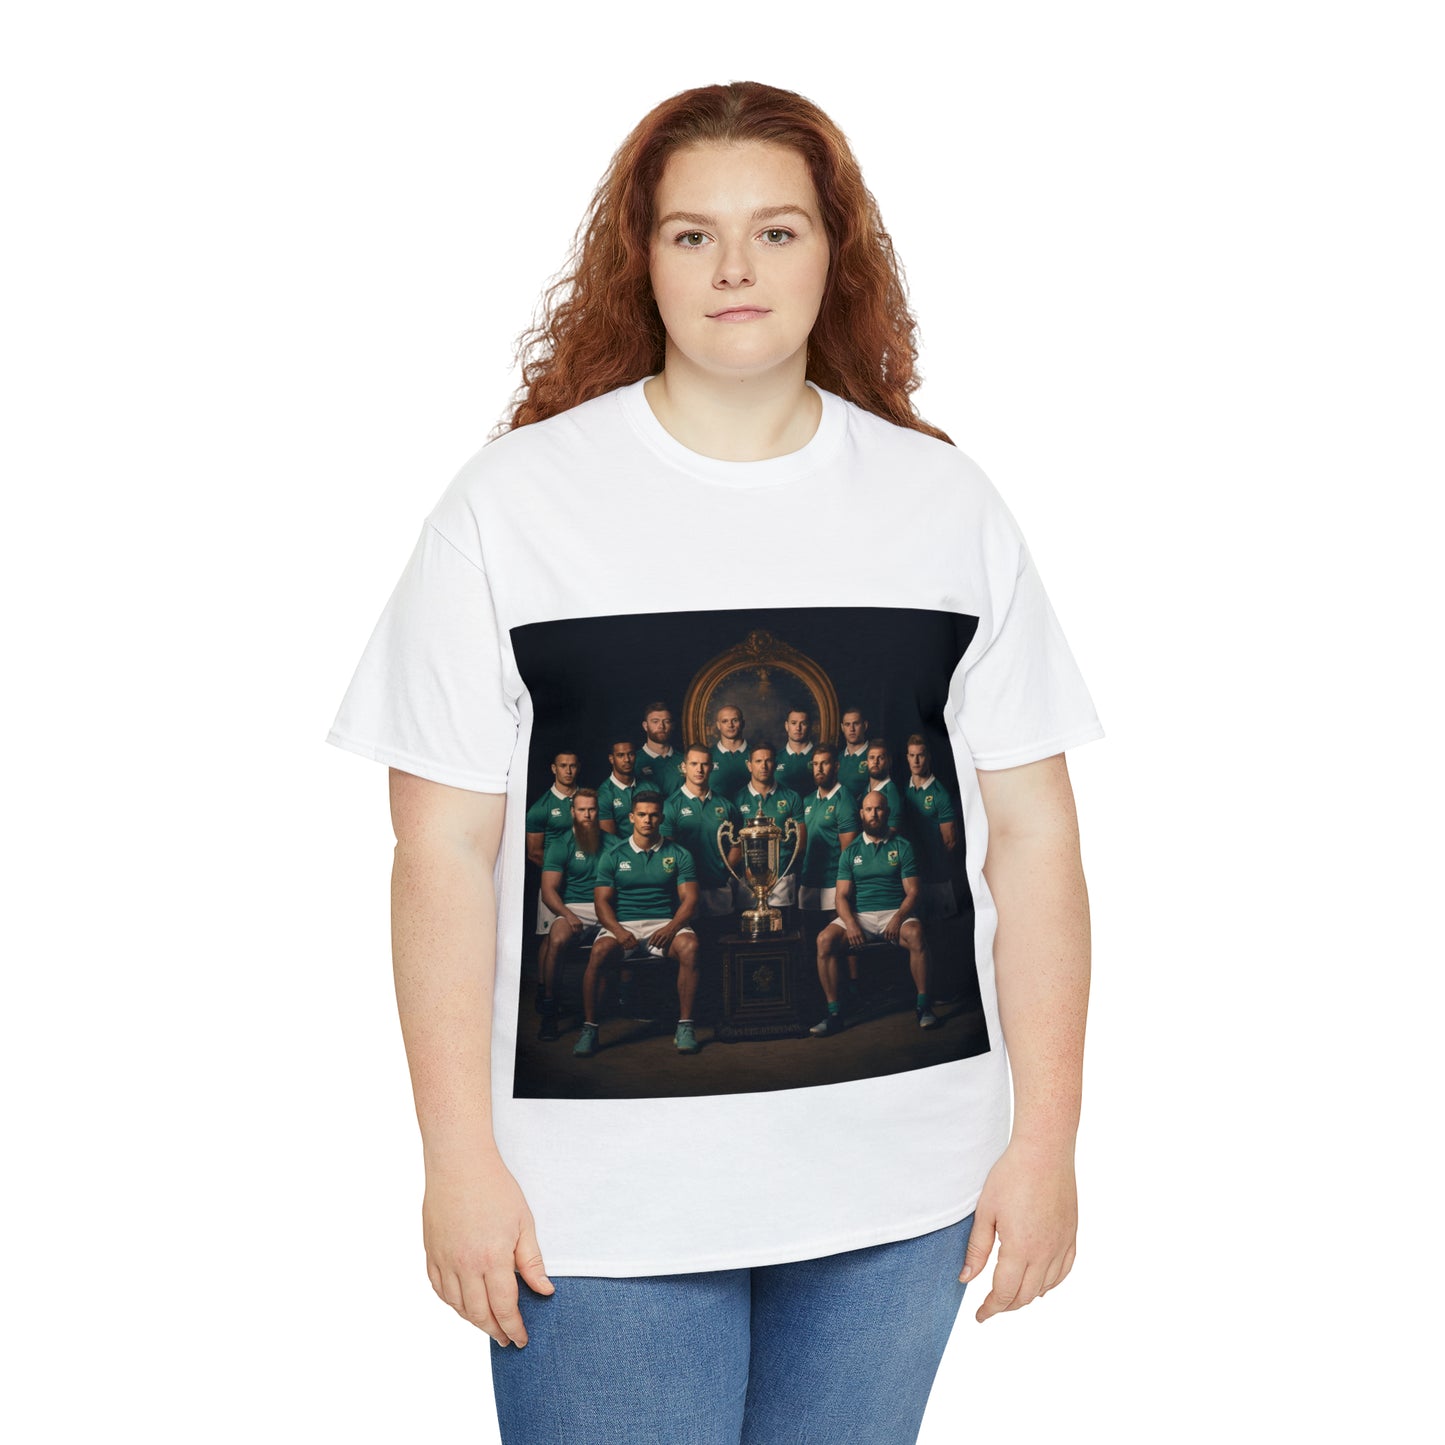 Ireland World Cup photoshoot - light shirts